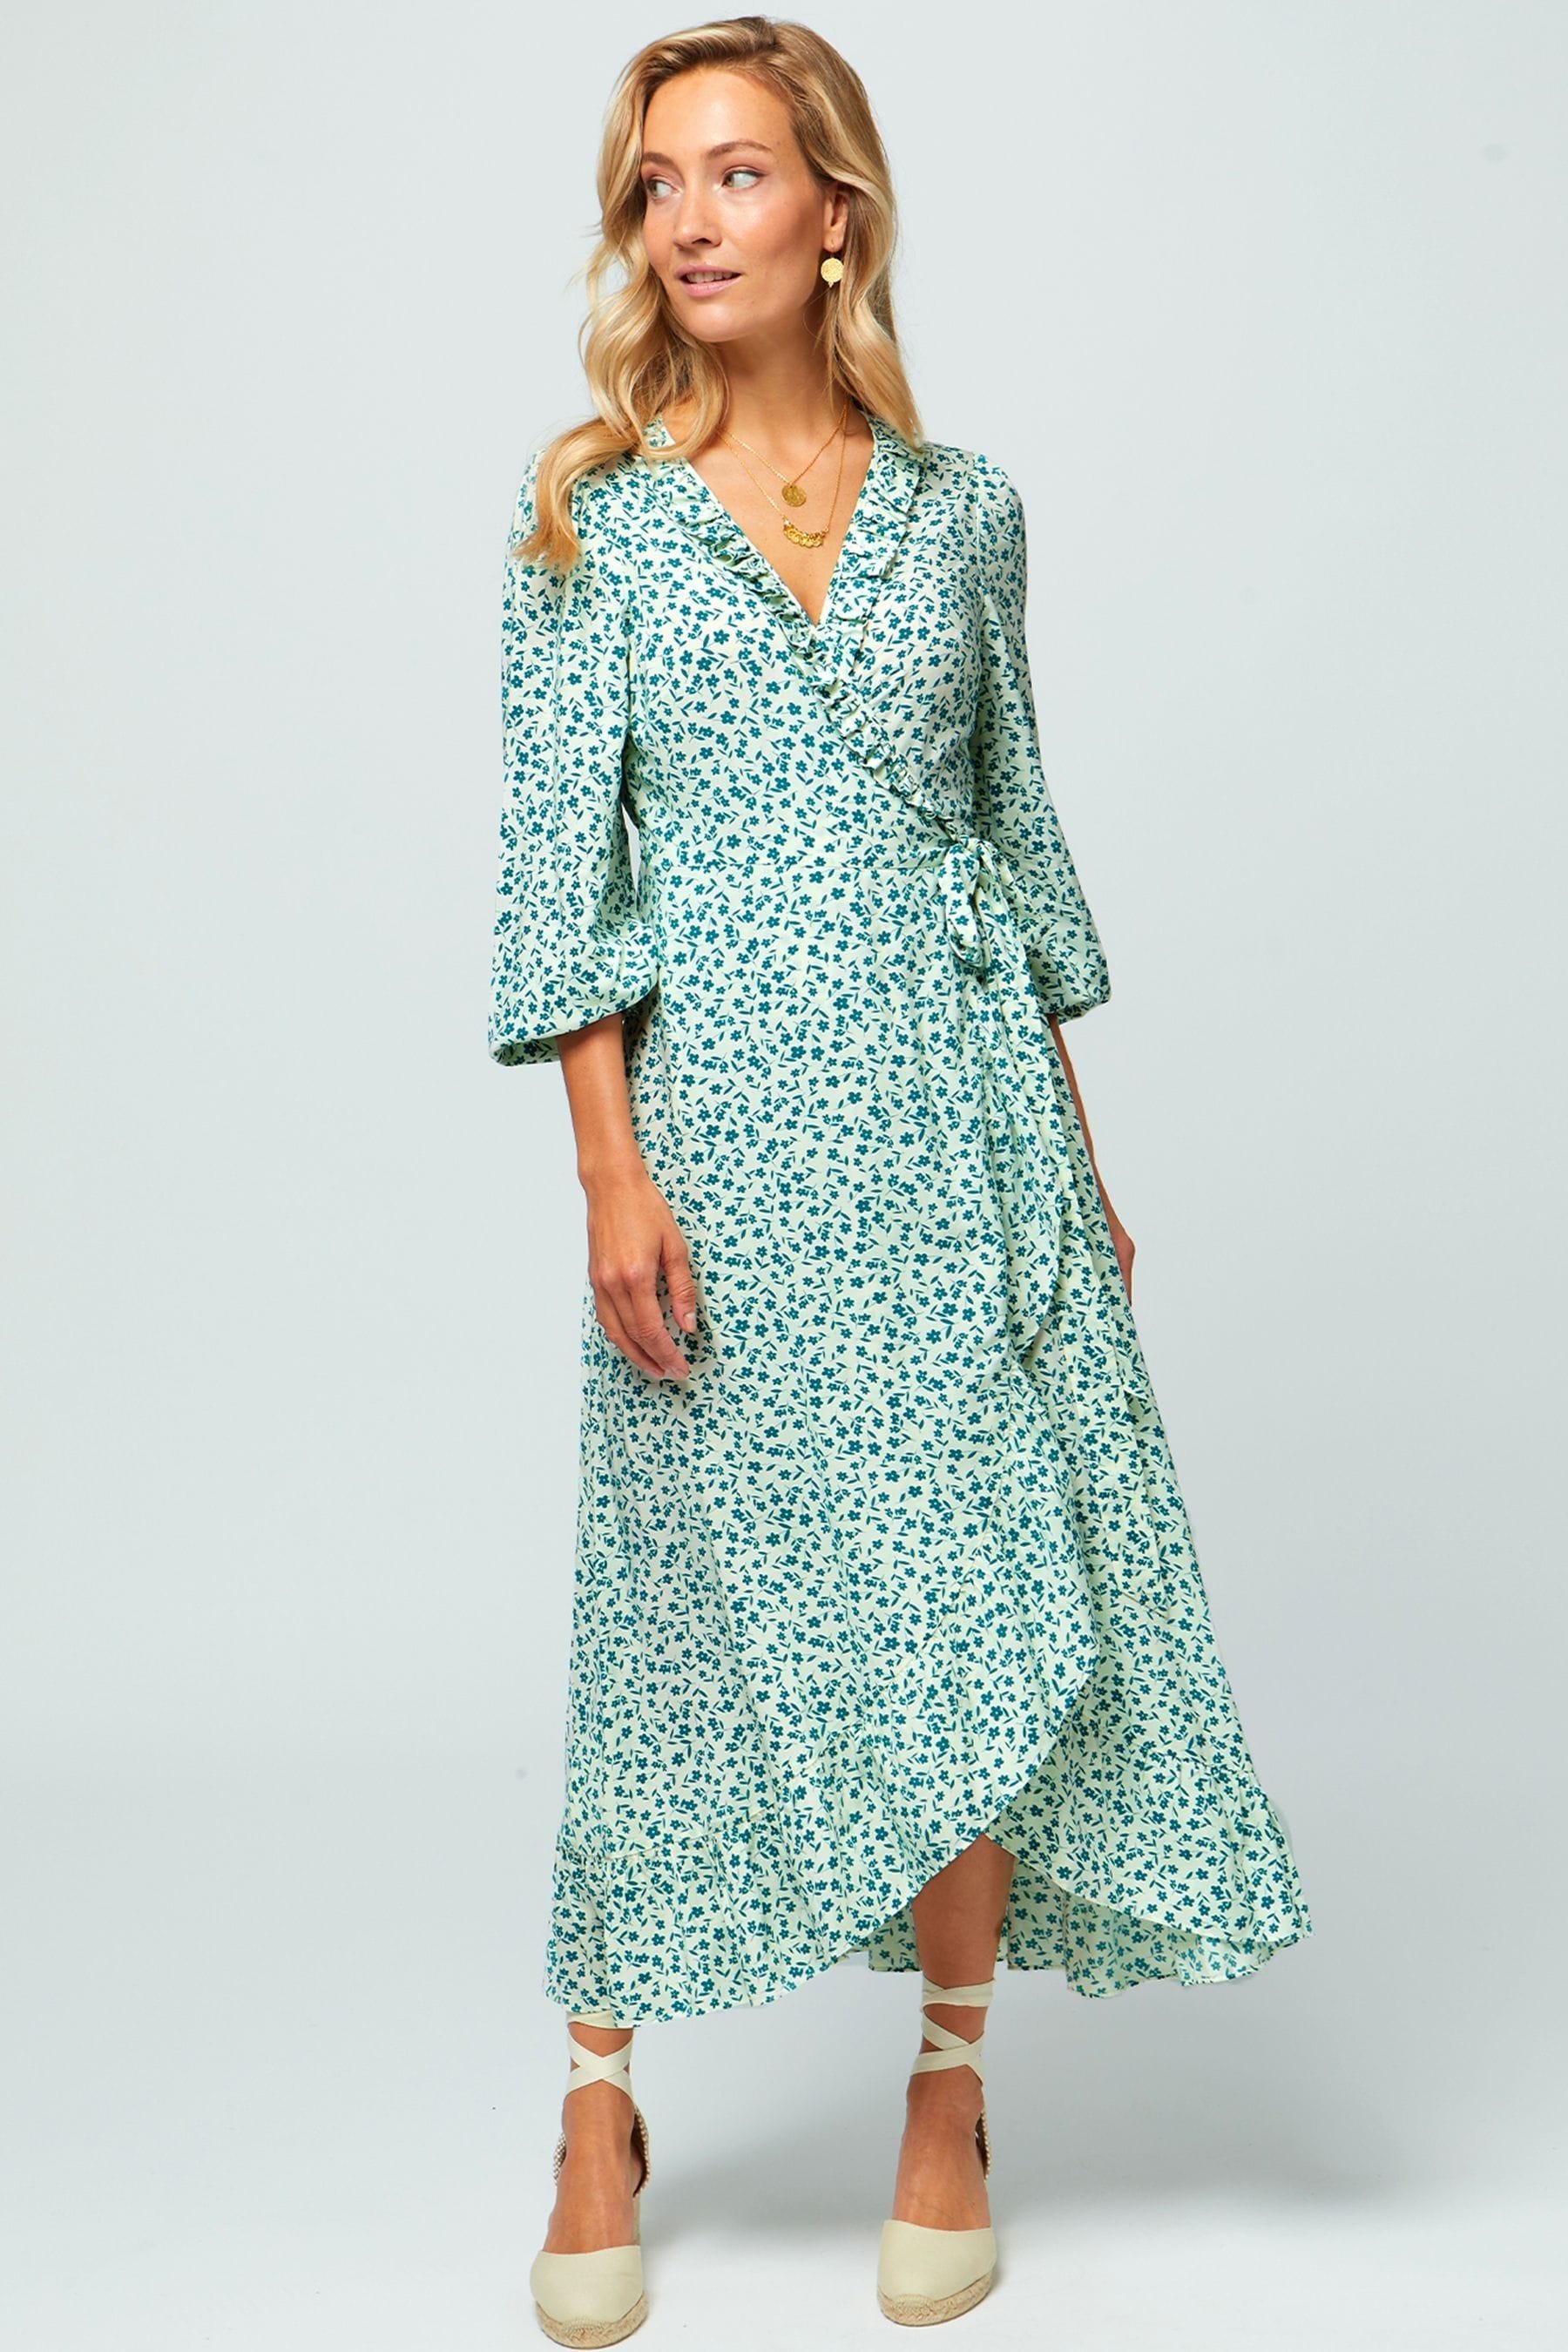 Buy Aspiga Cream Demi Long Sleeve Wrap Dress from the Next UK online shop